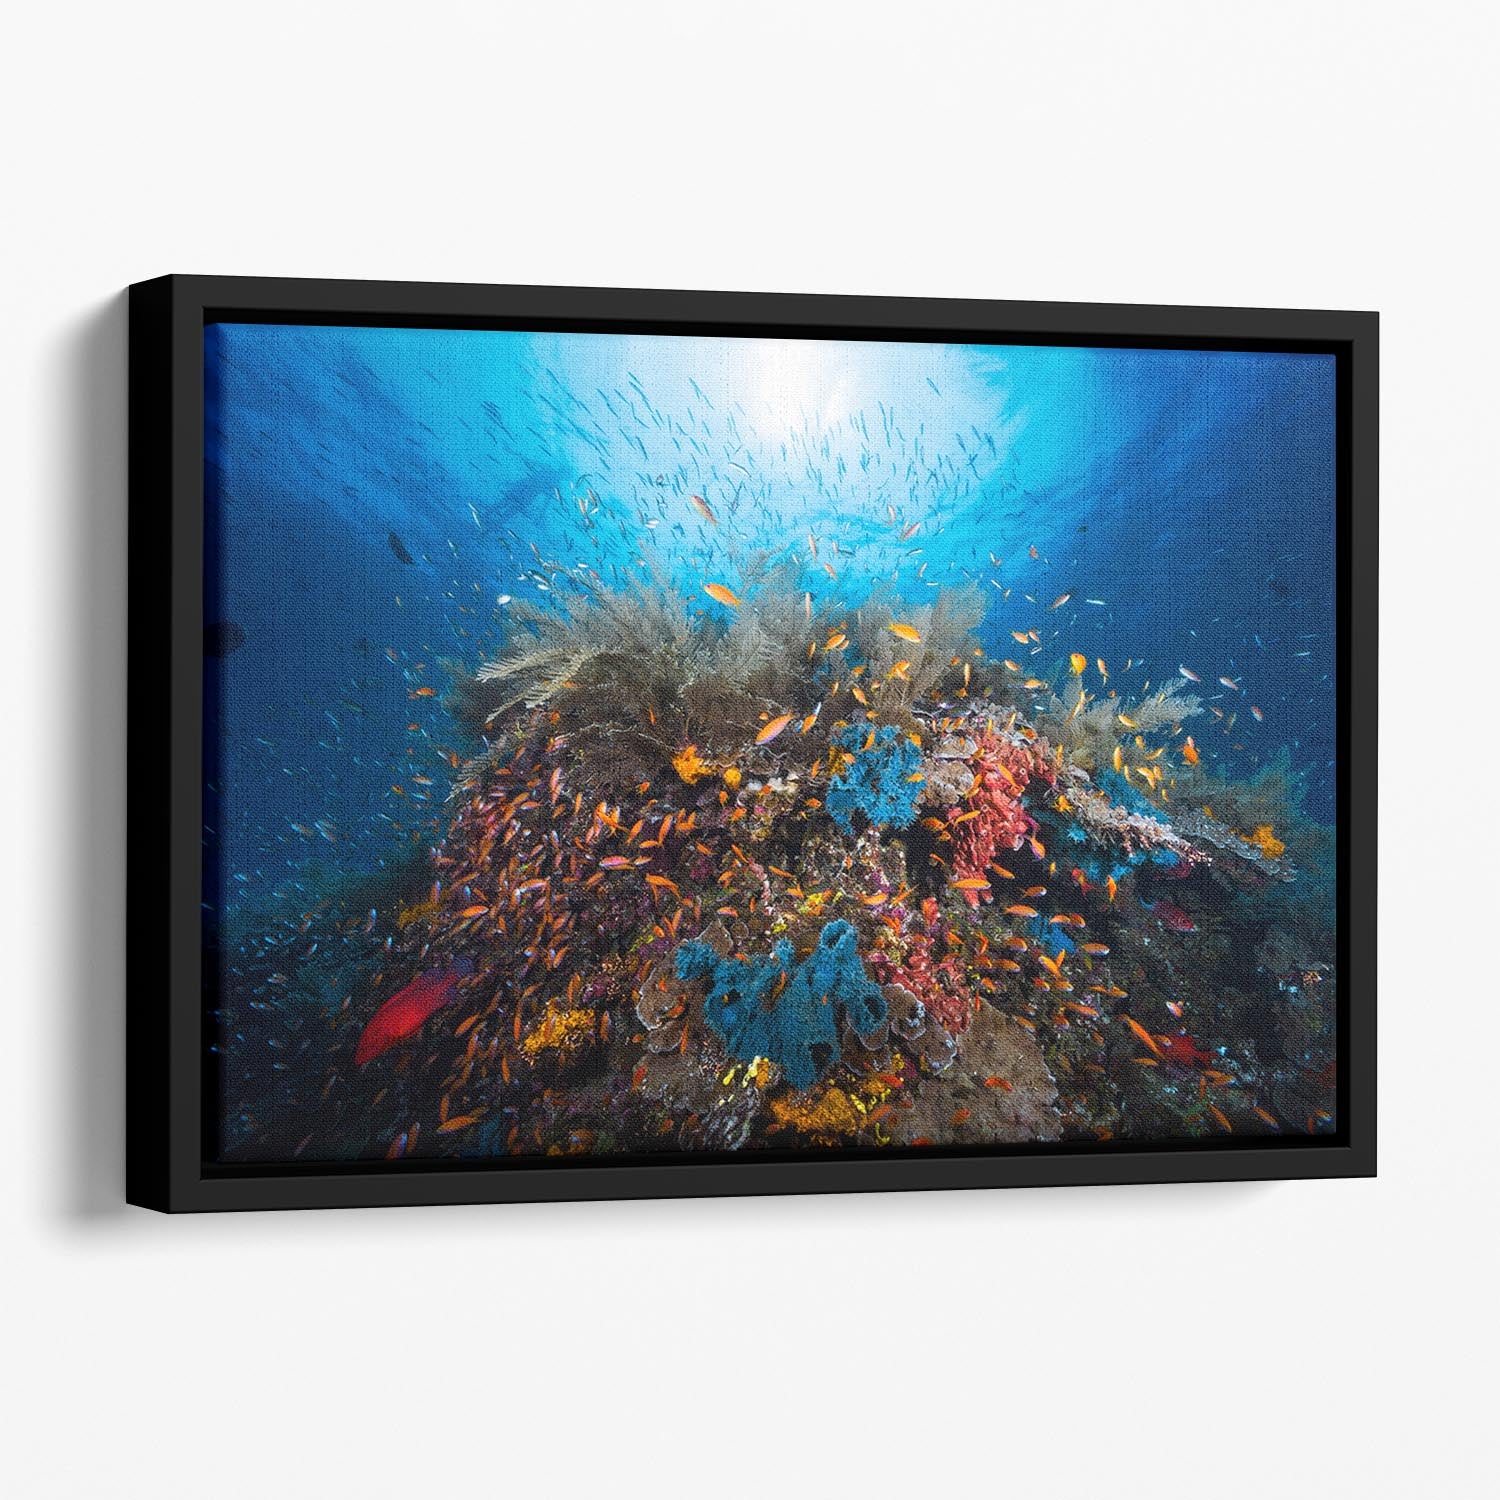 Apnea Floating Framed Canvas - Canvas Art Rocks - 1